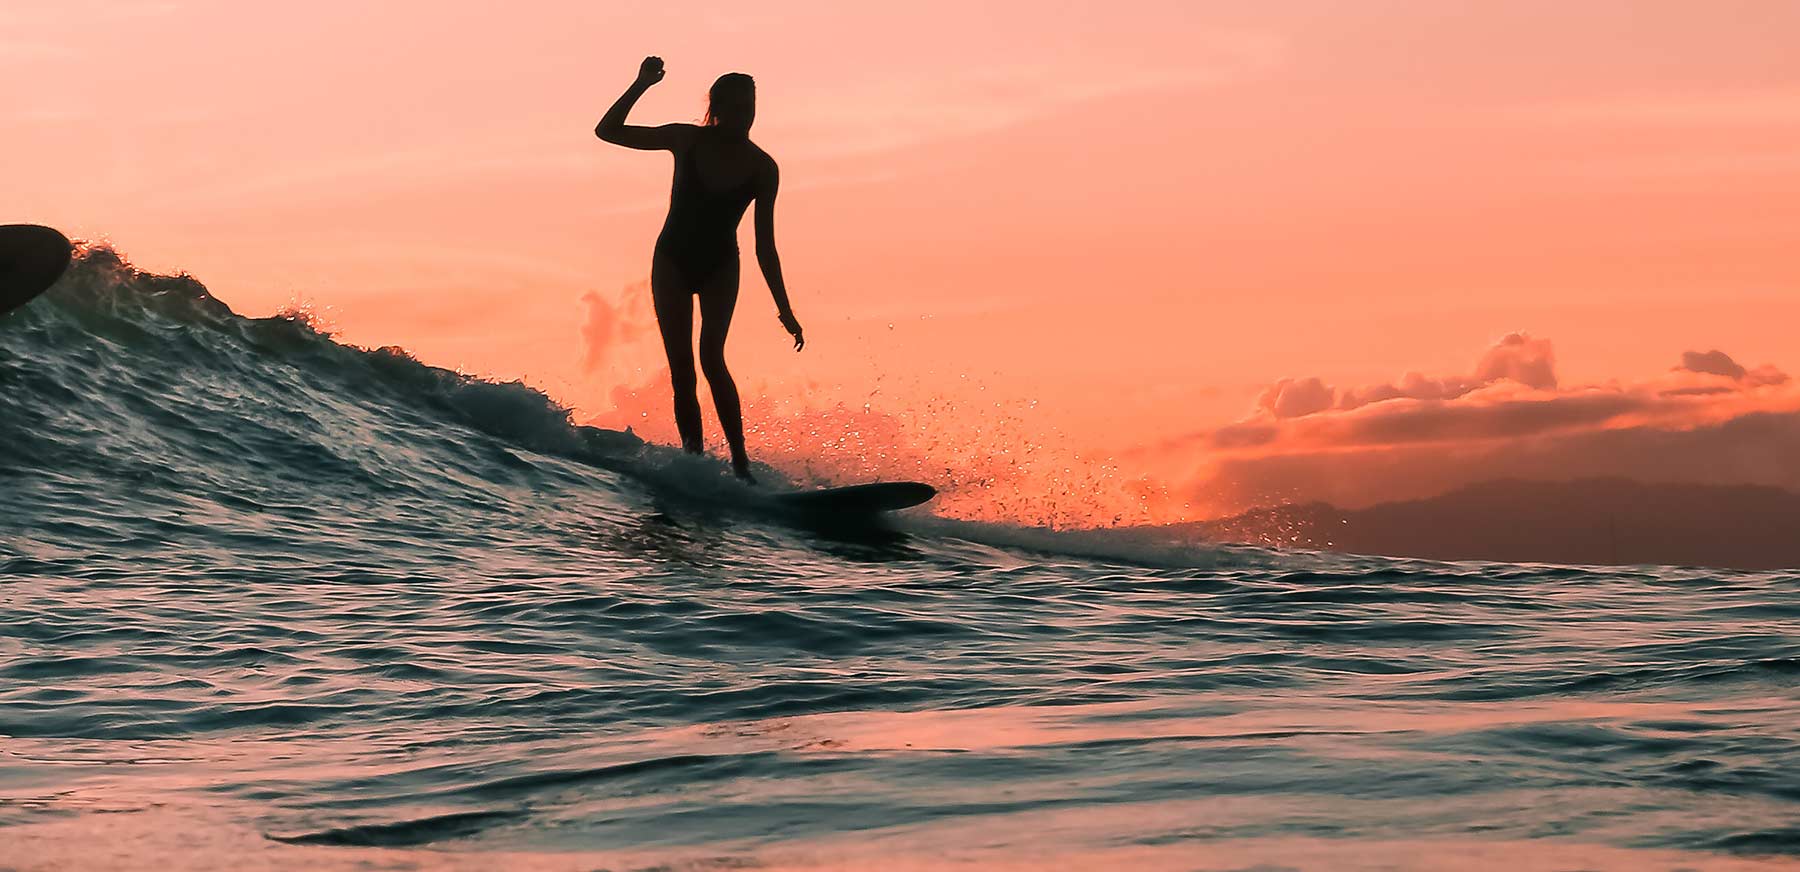 Women's Surfing Steamers